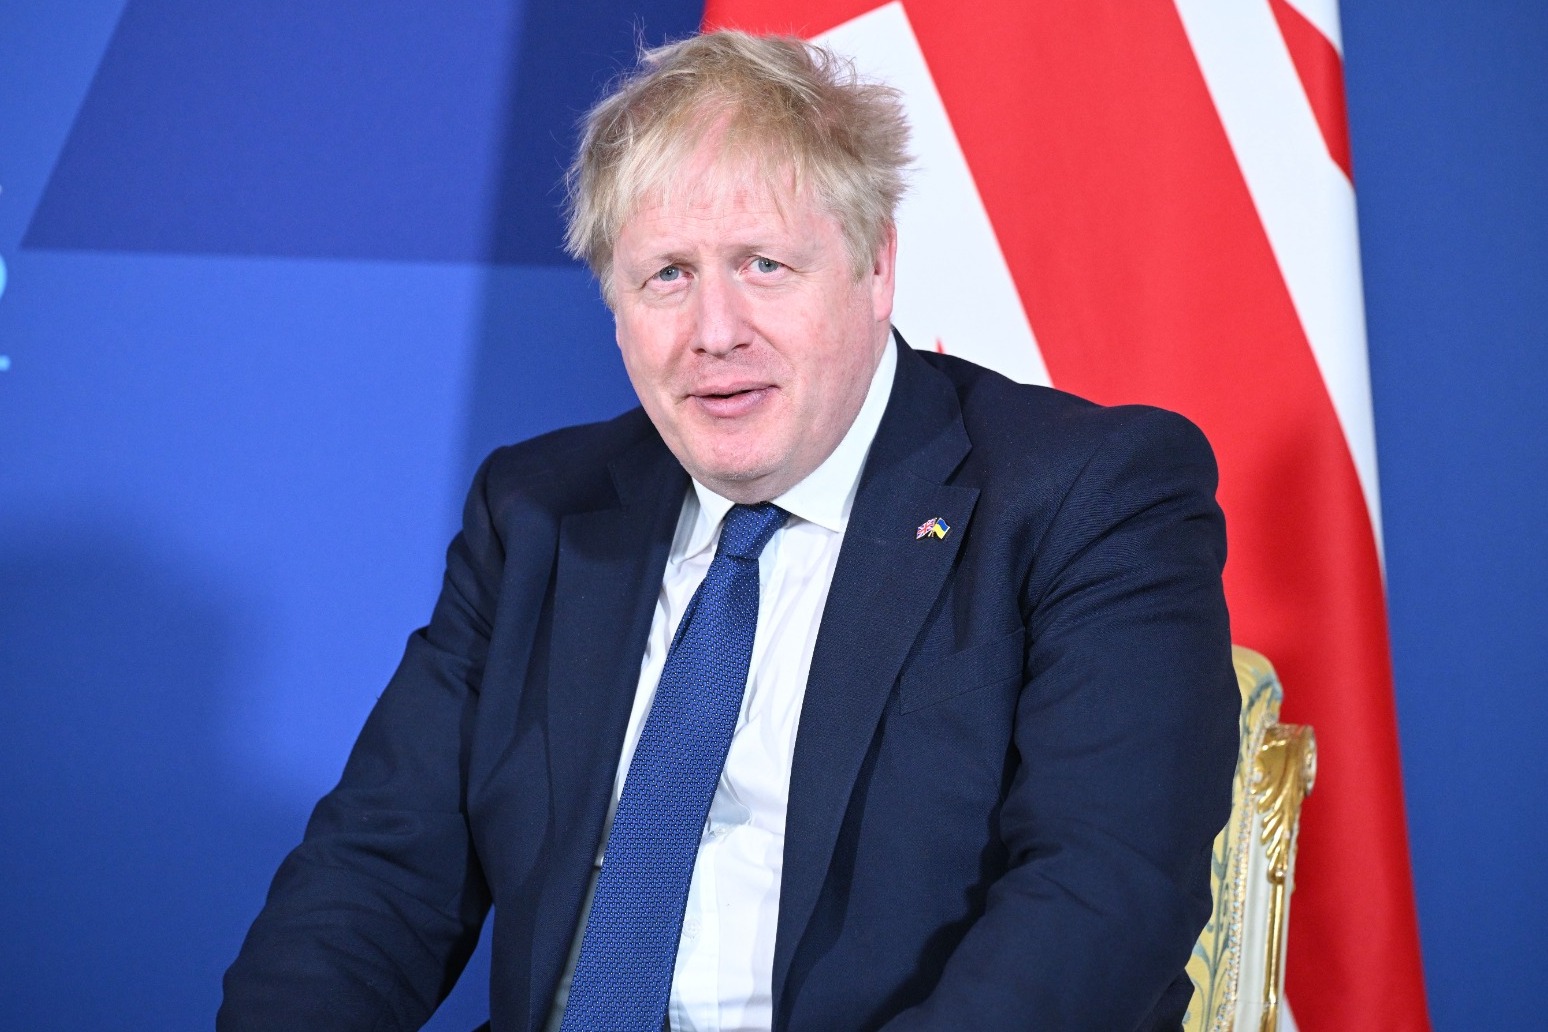 UK will be generous to Ukrainian refugees, says Johnson 